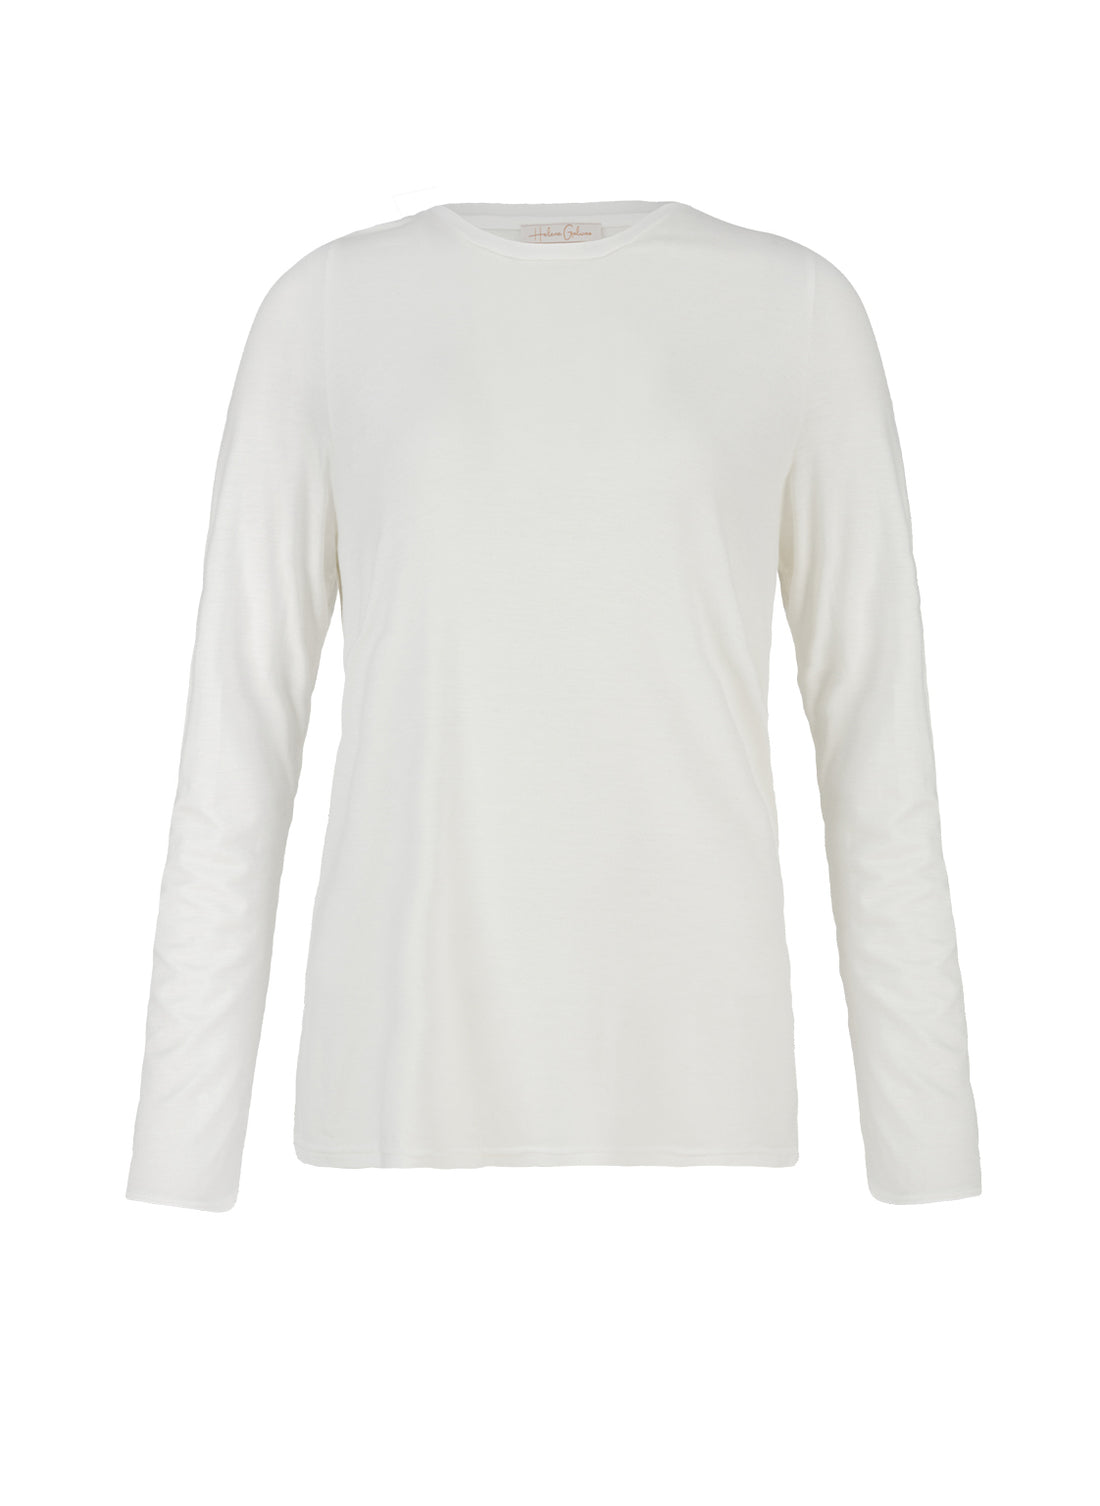 Basic langarm Shirt aus Viskose, vielseitig einsetzbar